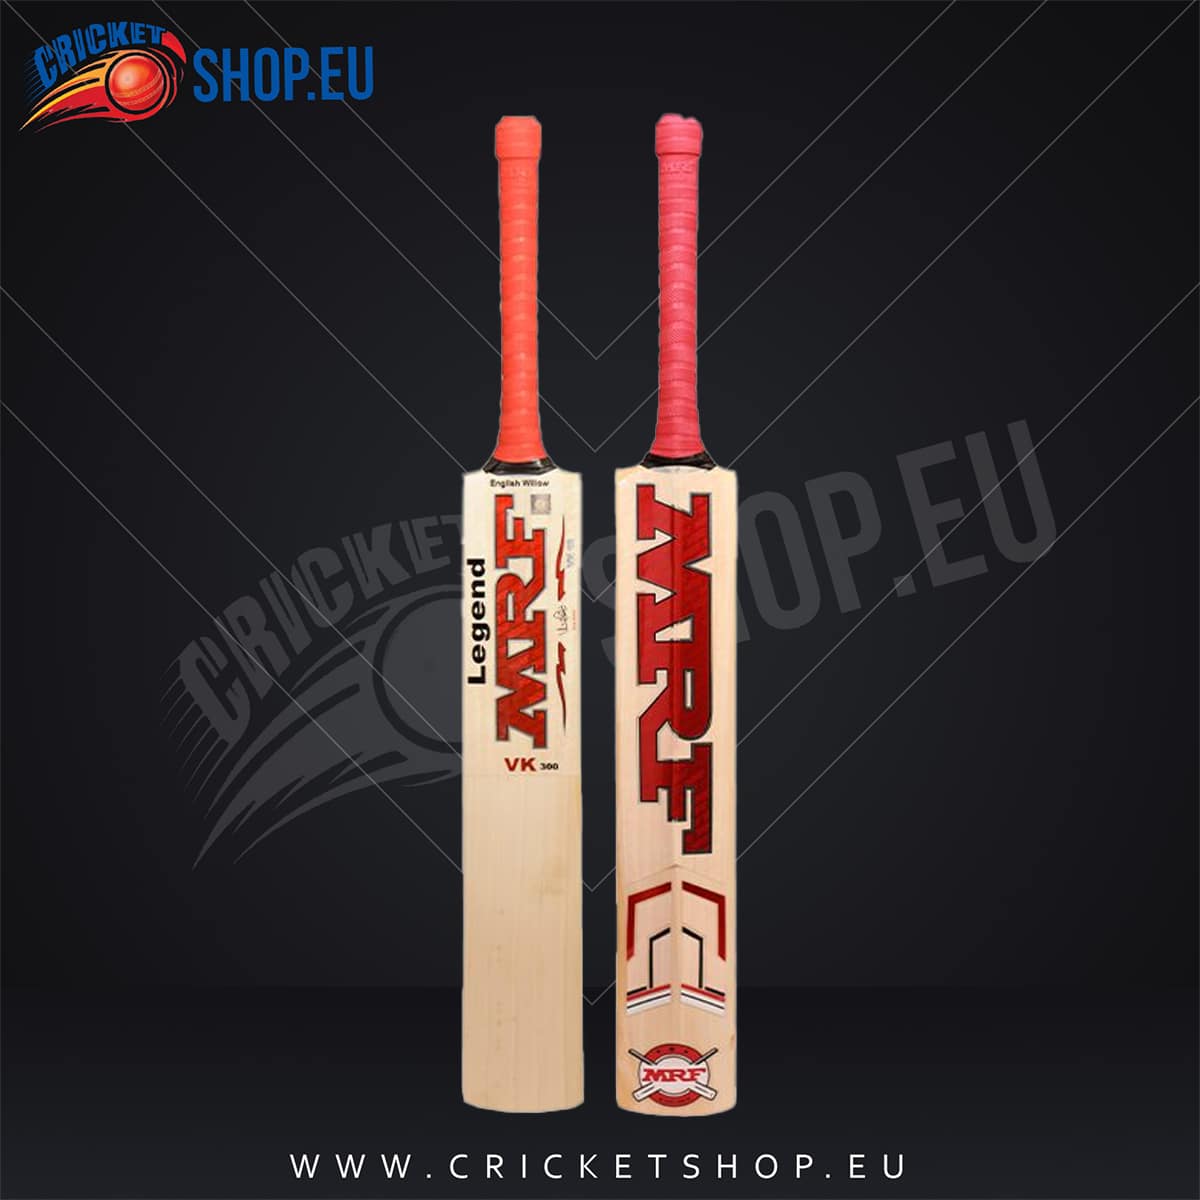 mrf-legend-vk-300-cricket-bat